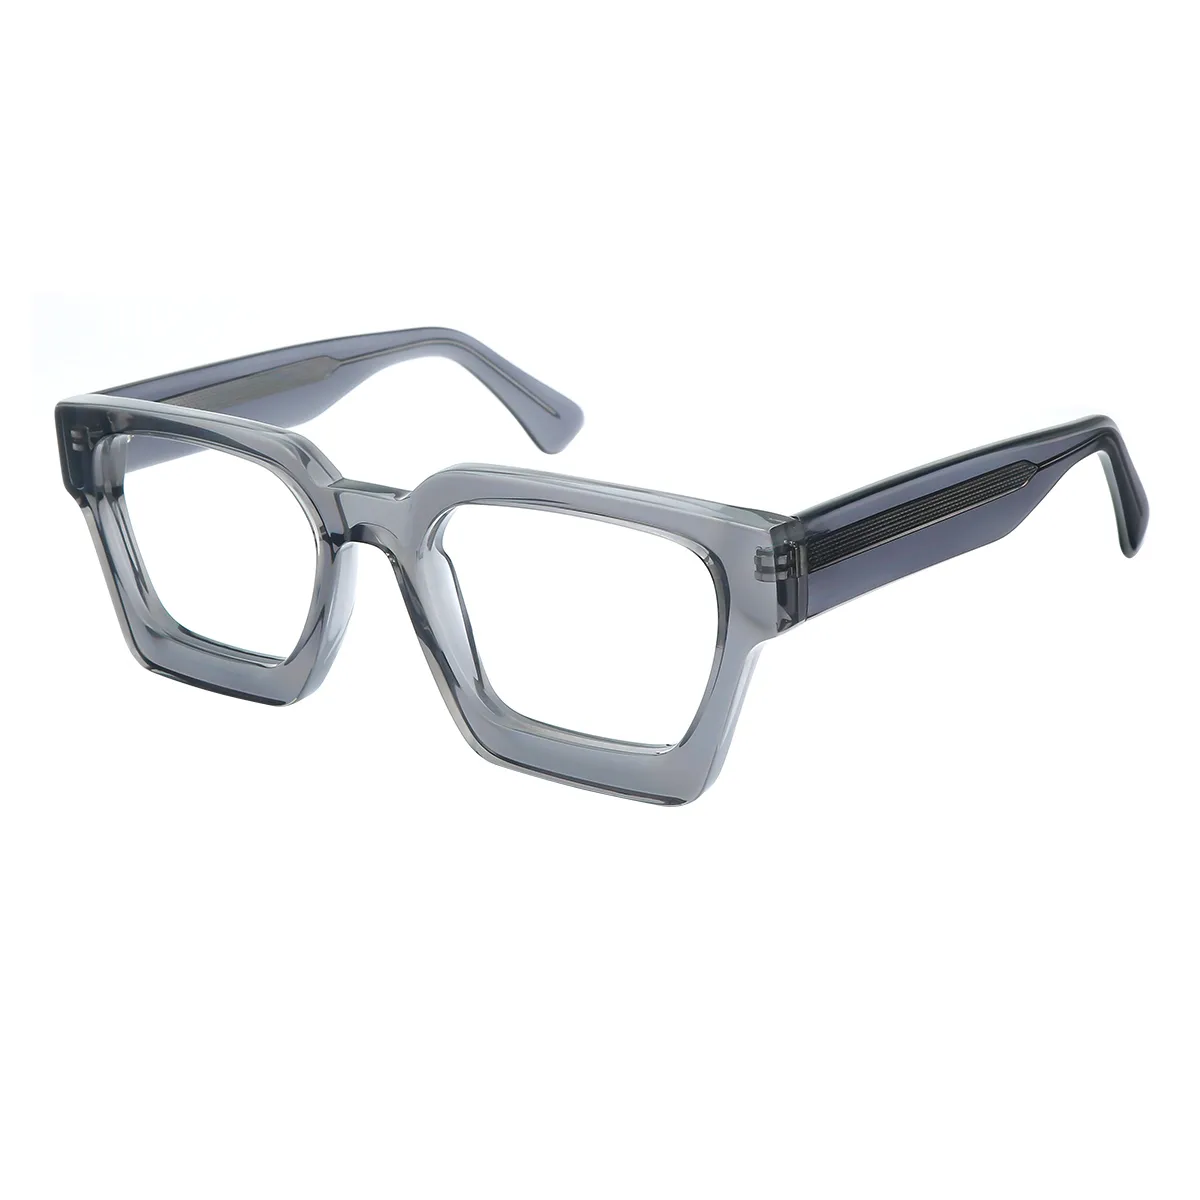 Granada - Square Transparent Gray Glasses for Men & Women - EFE